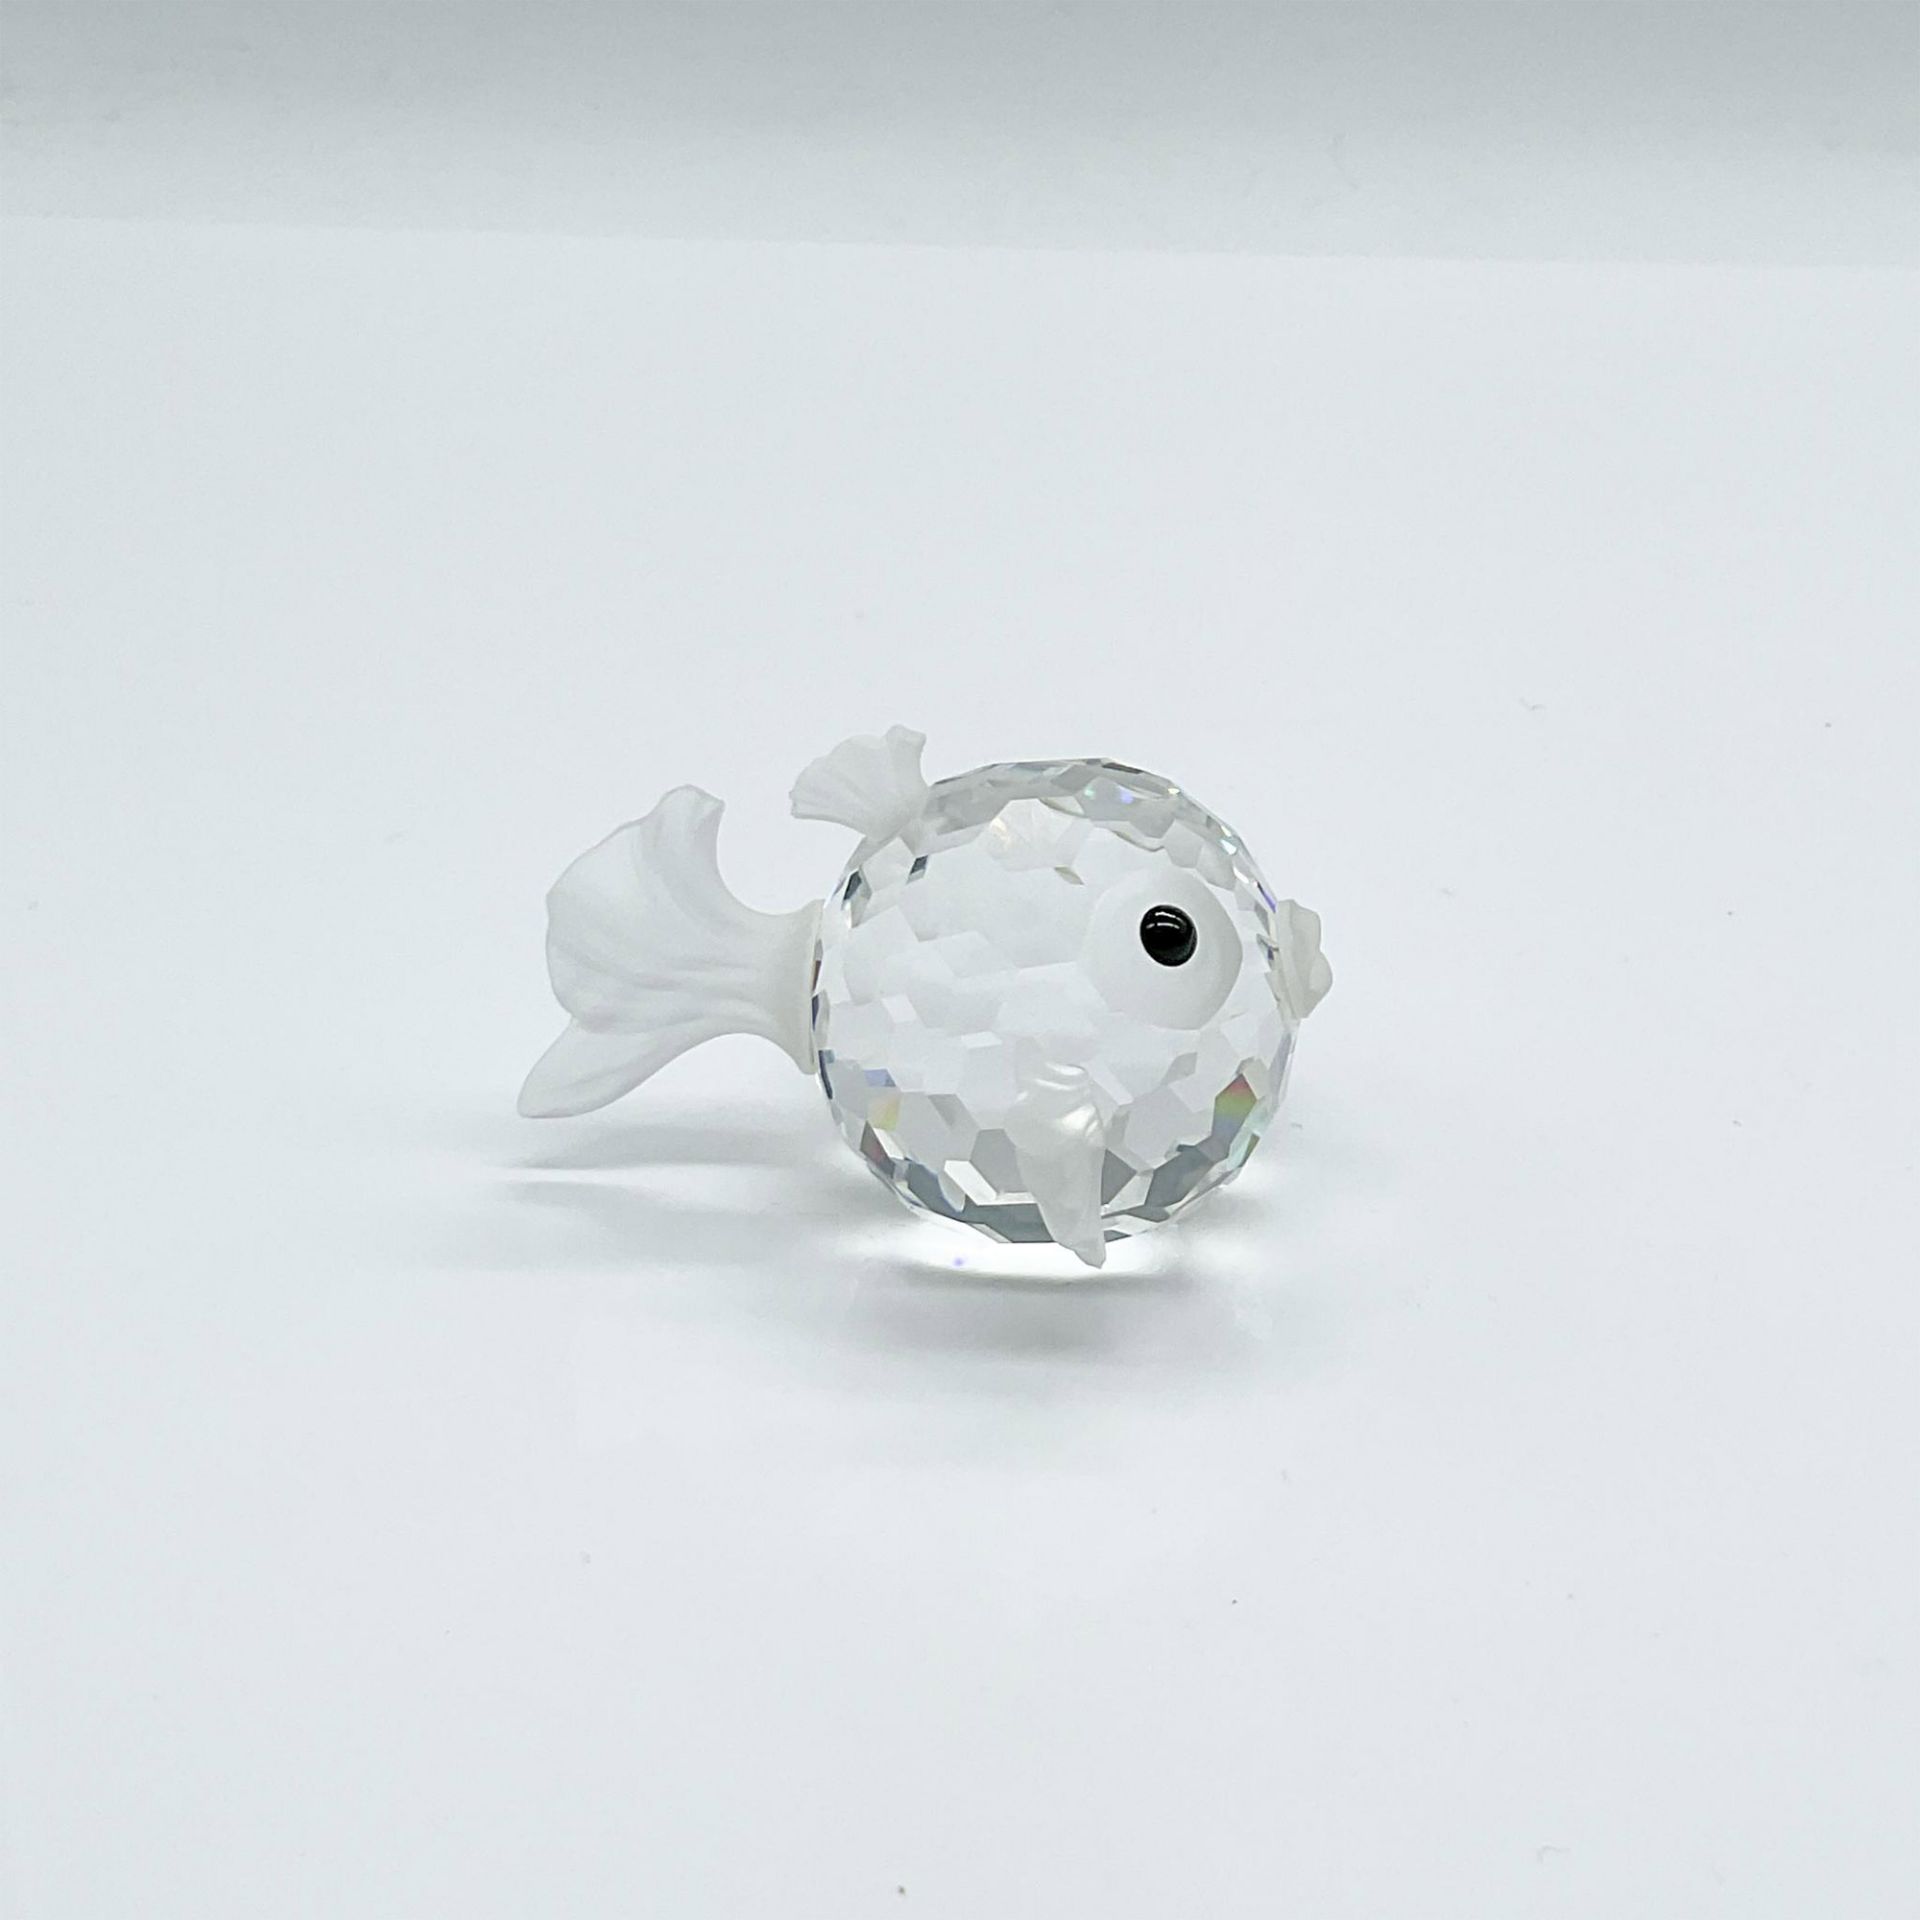 Swarovski Crystal Figurine, Blowfish - Image 3 of 4